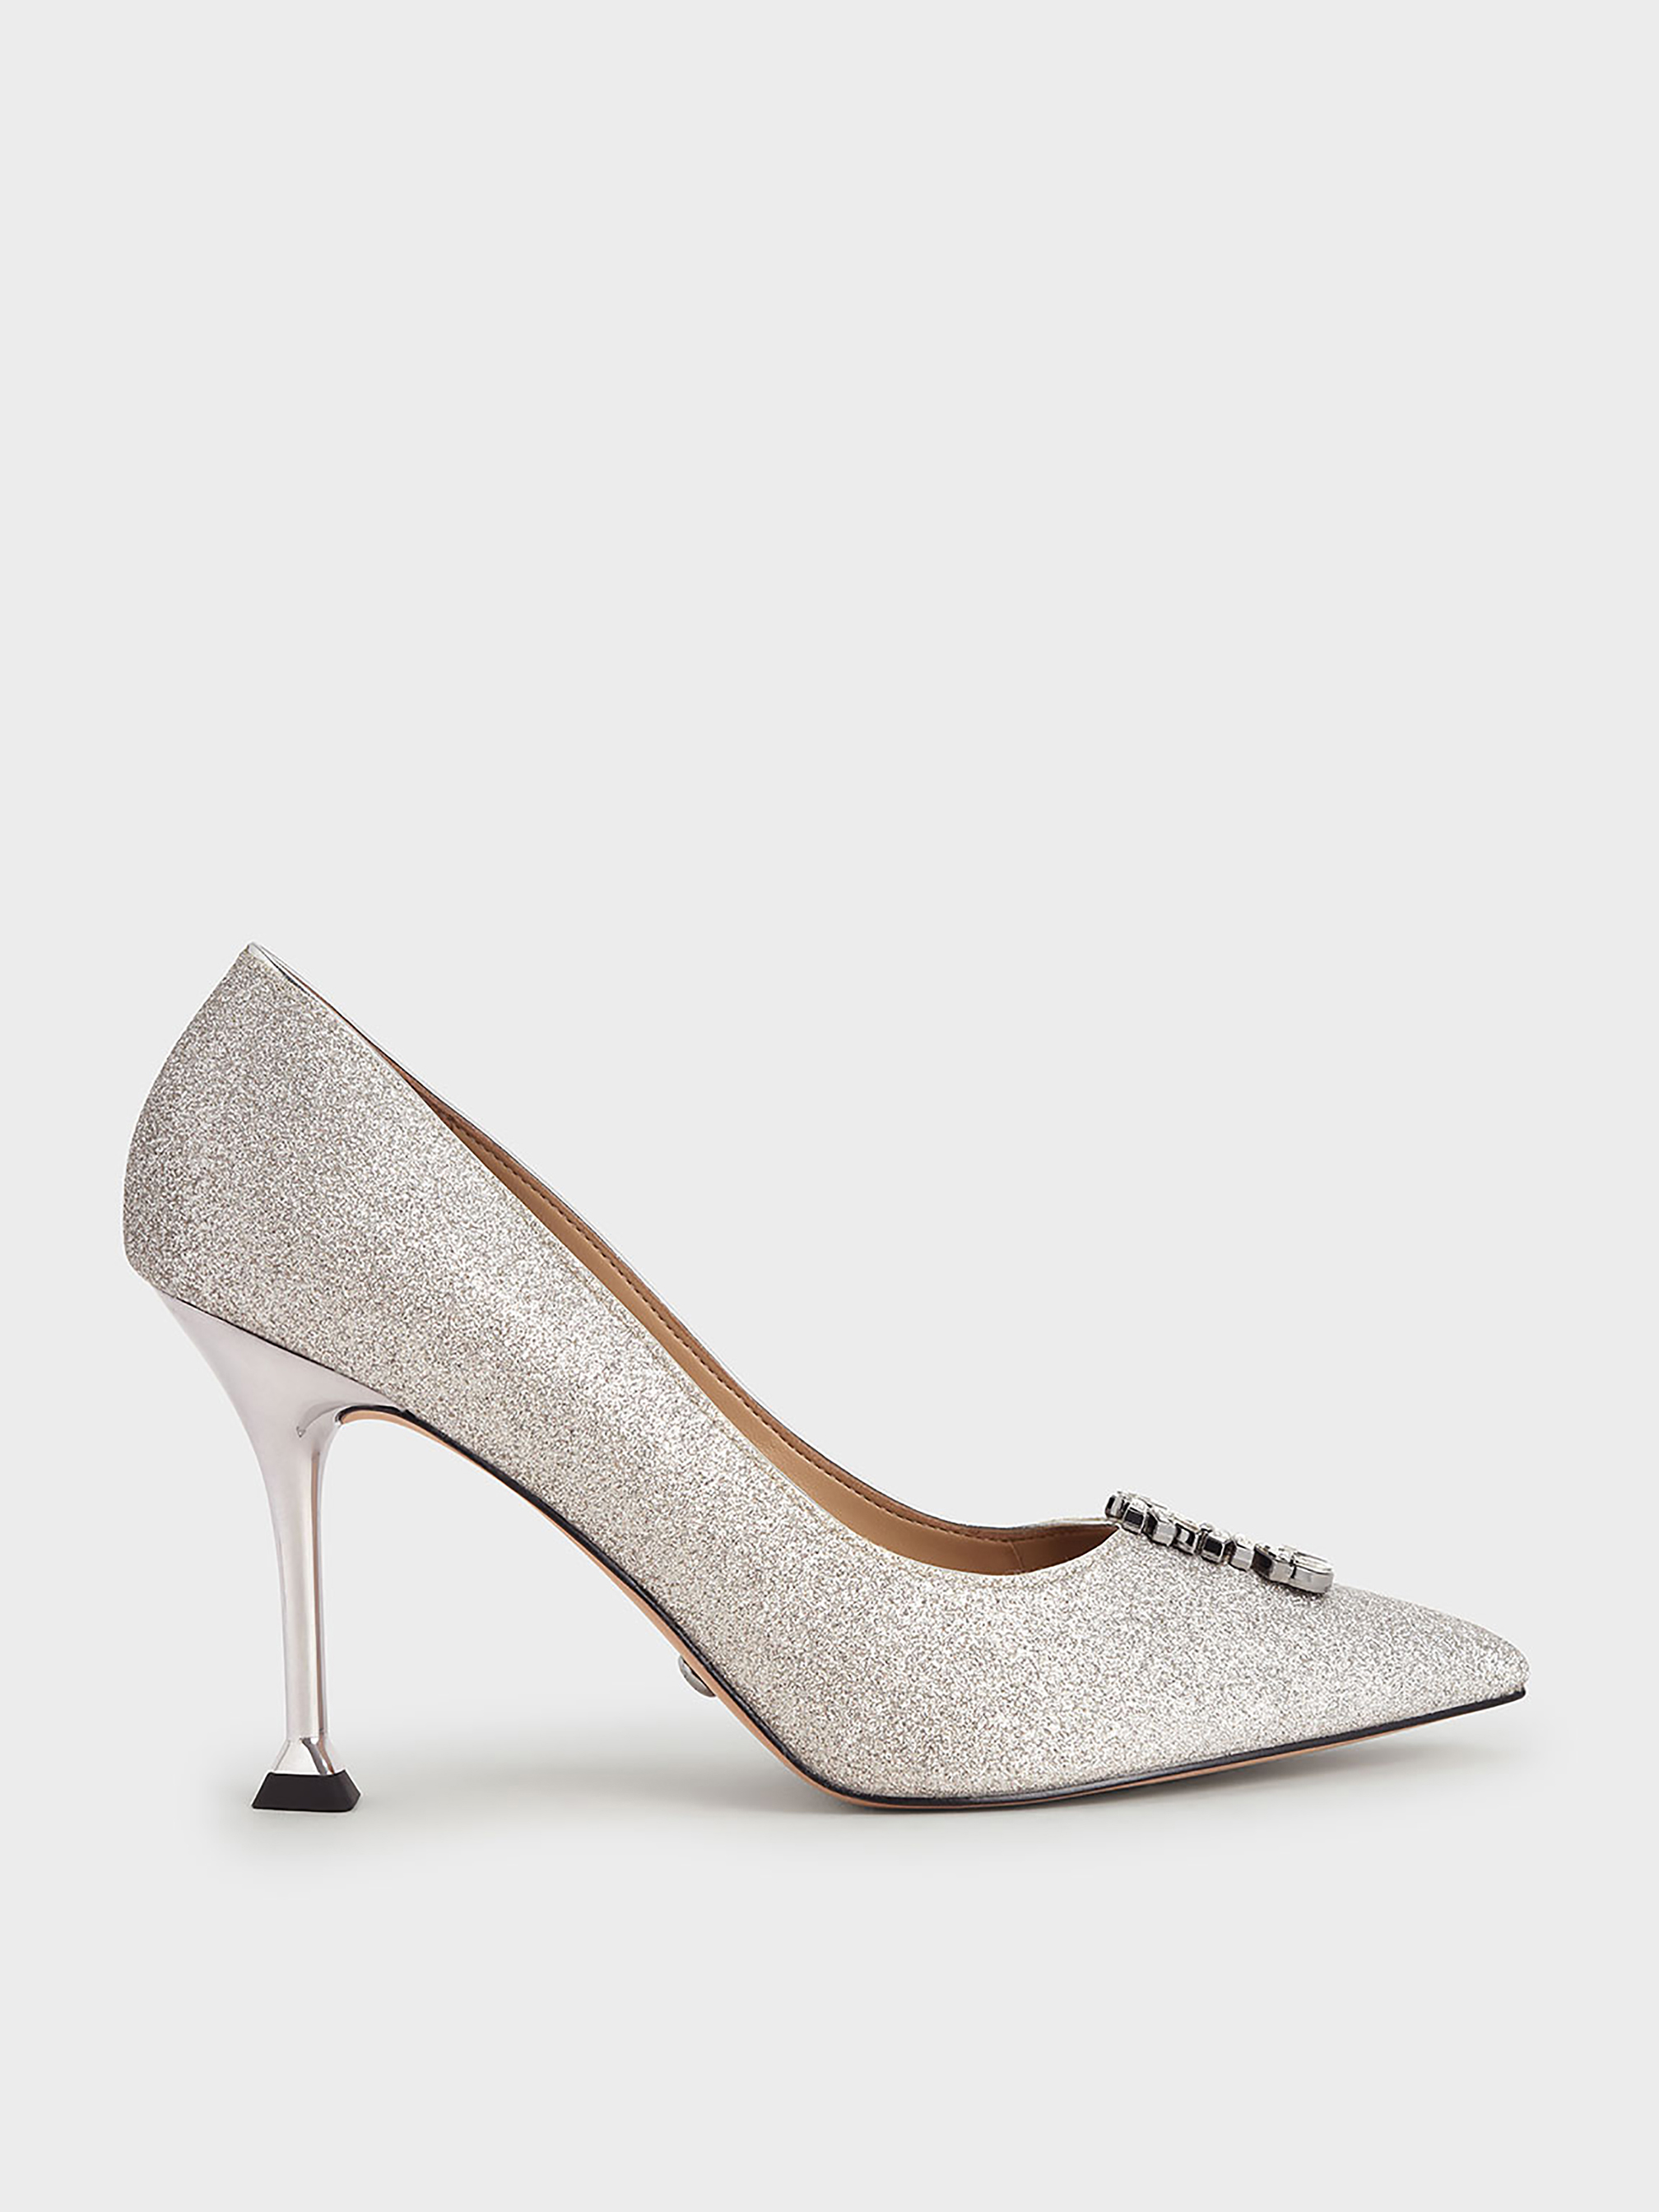 Diamond Silver Glitter Heels by Mollini | Shop Online at Mollini